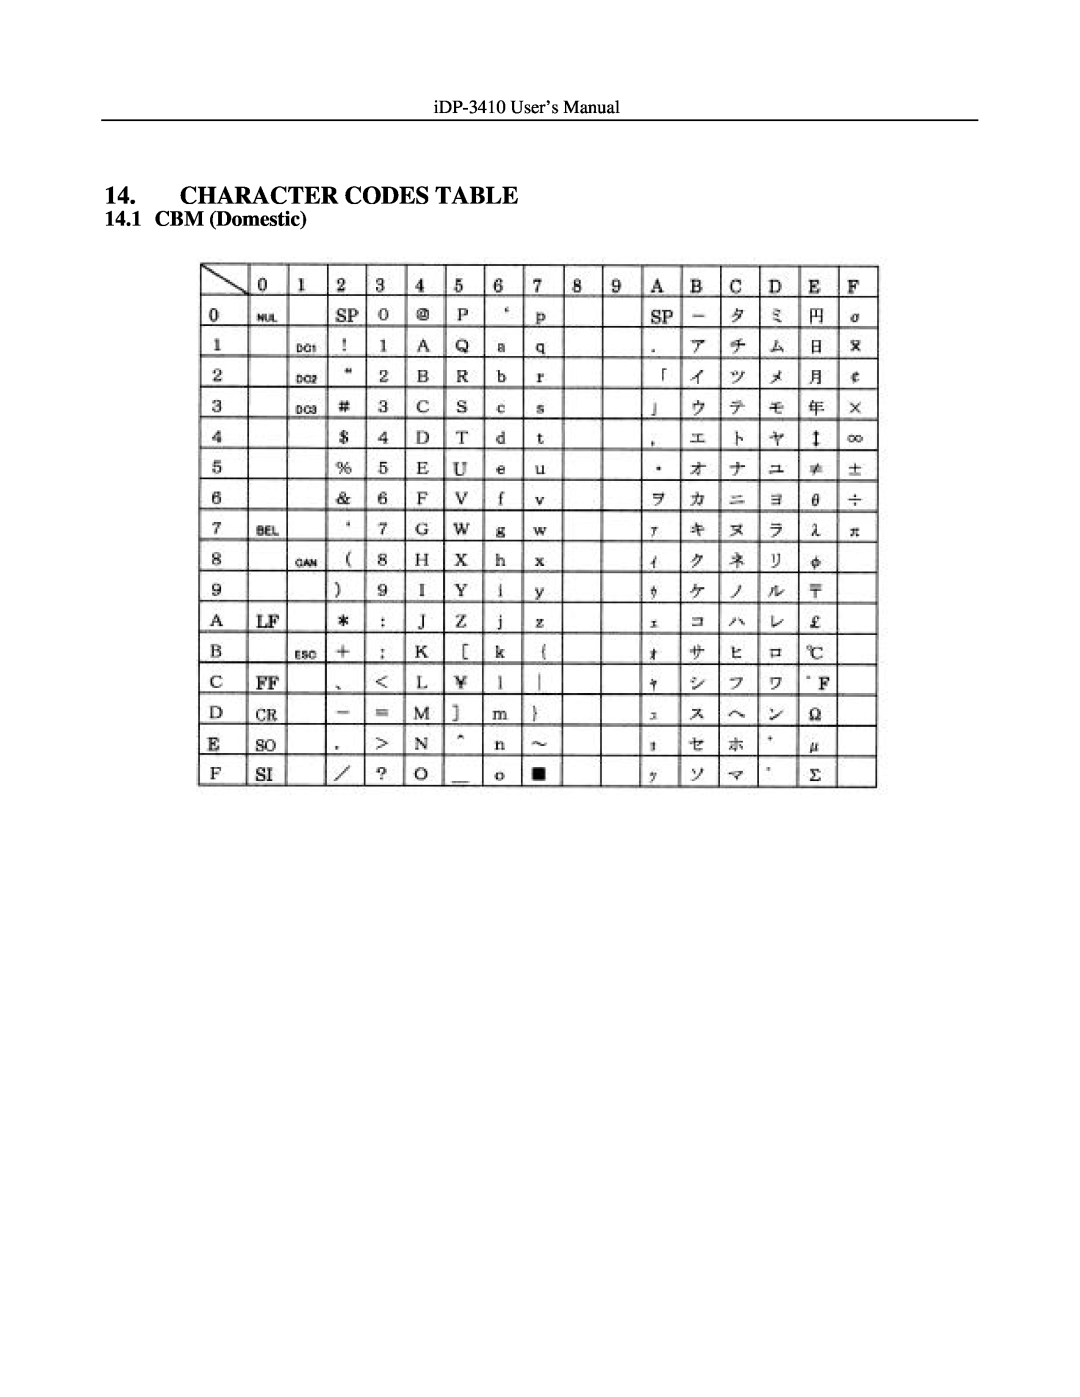 Addlogix iDP-3410 user manual Character Codes Table, CBM Domestic 